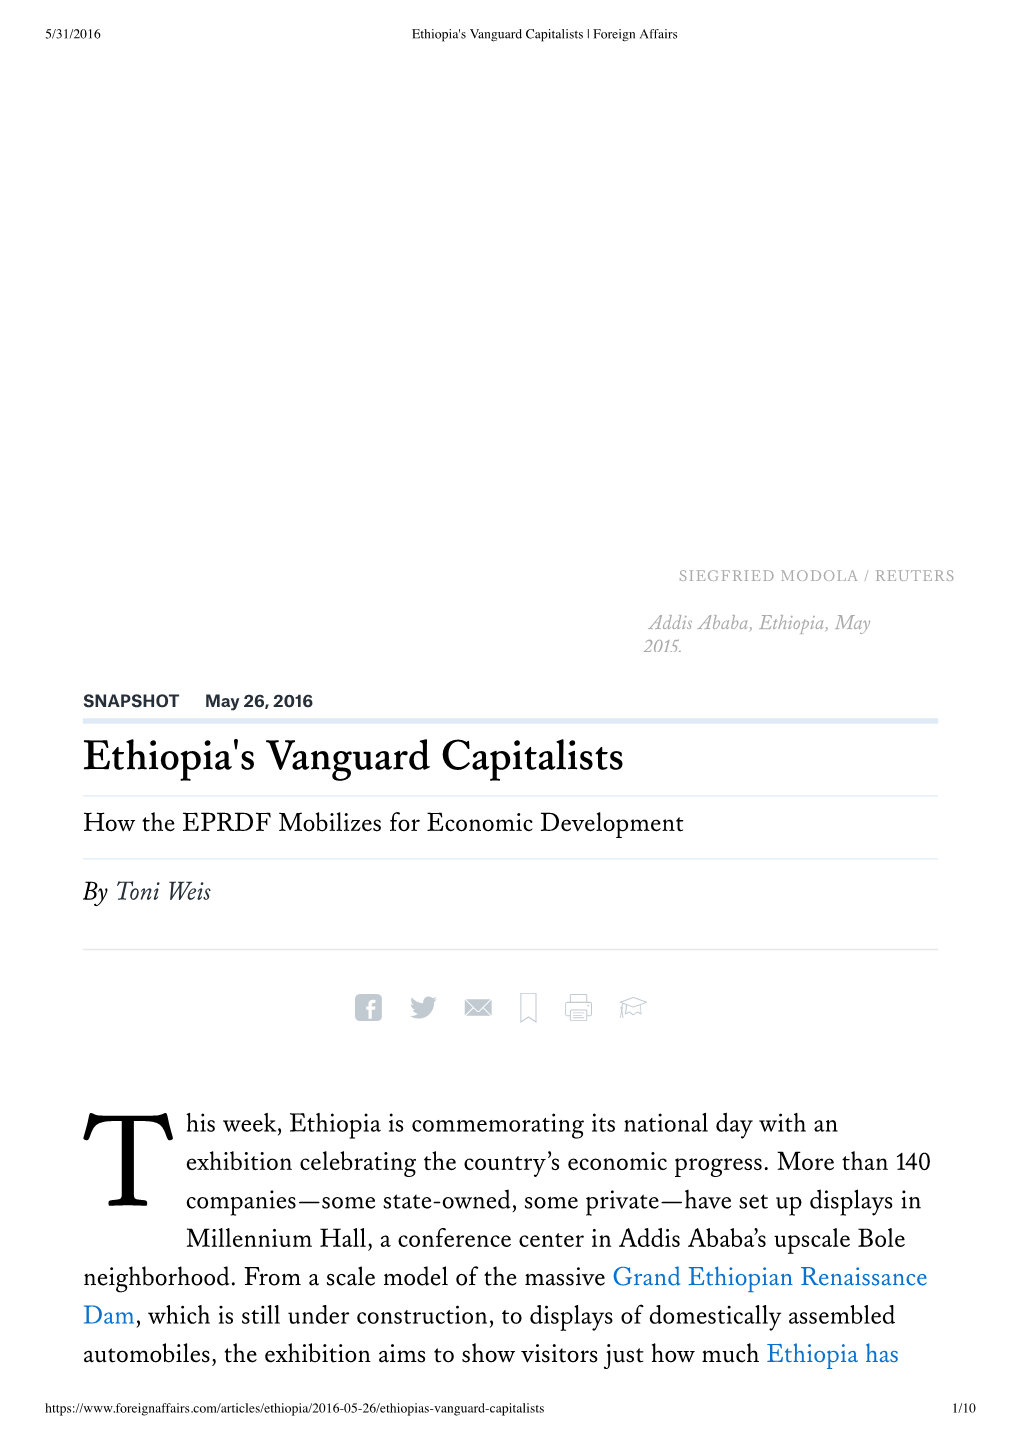 Ethiopia's Vanguard Capitalists | Foreign Affairs